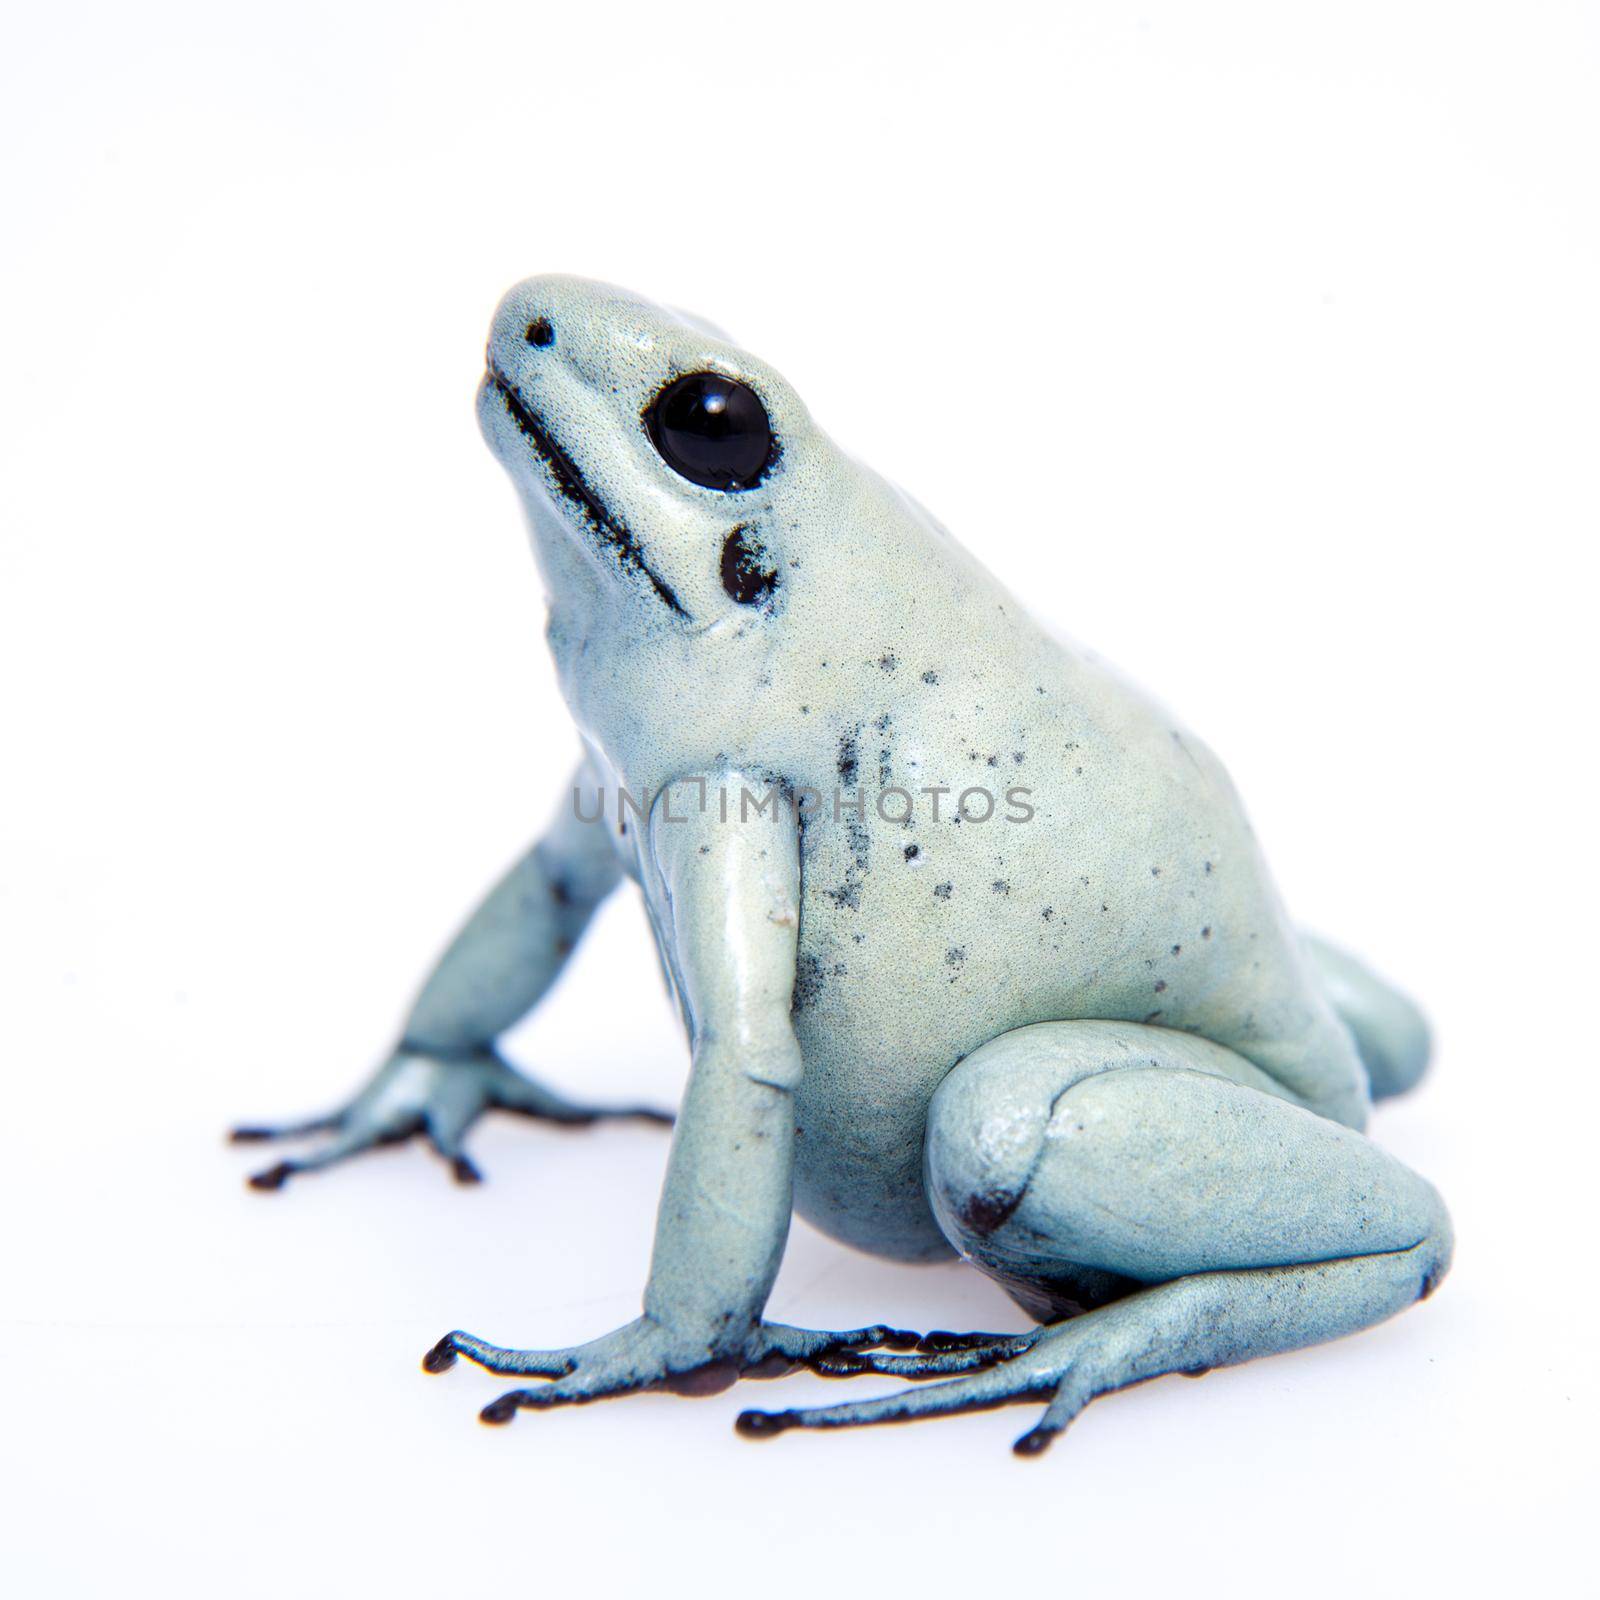 The golden poison frog, Phyllobates terribilis Mint, isolated on white background.